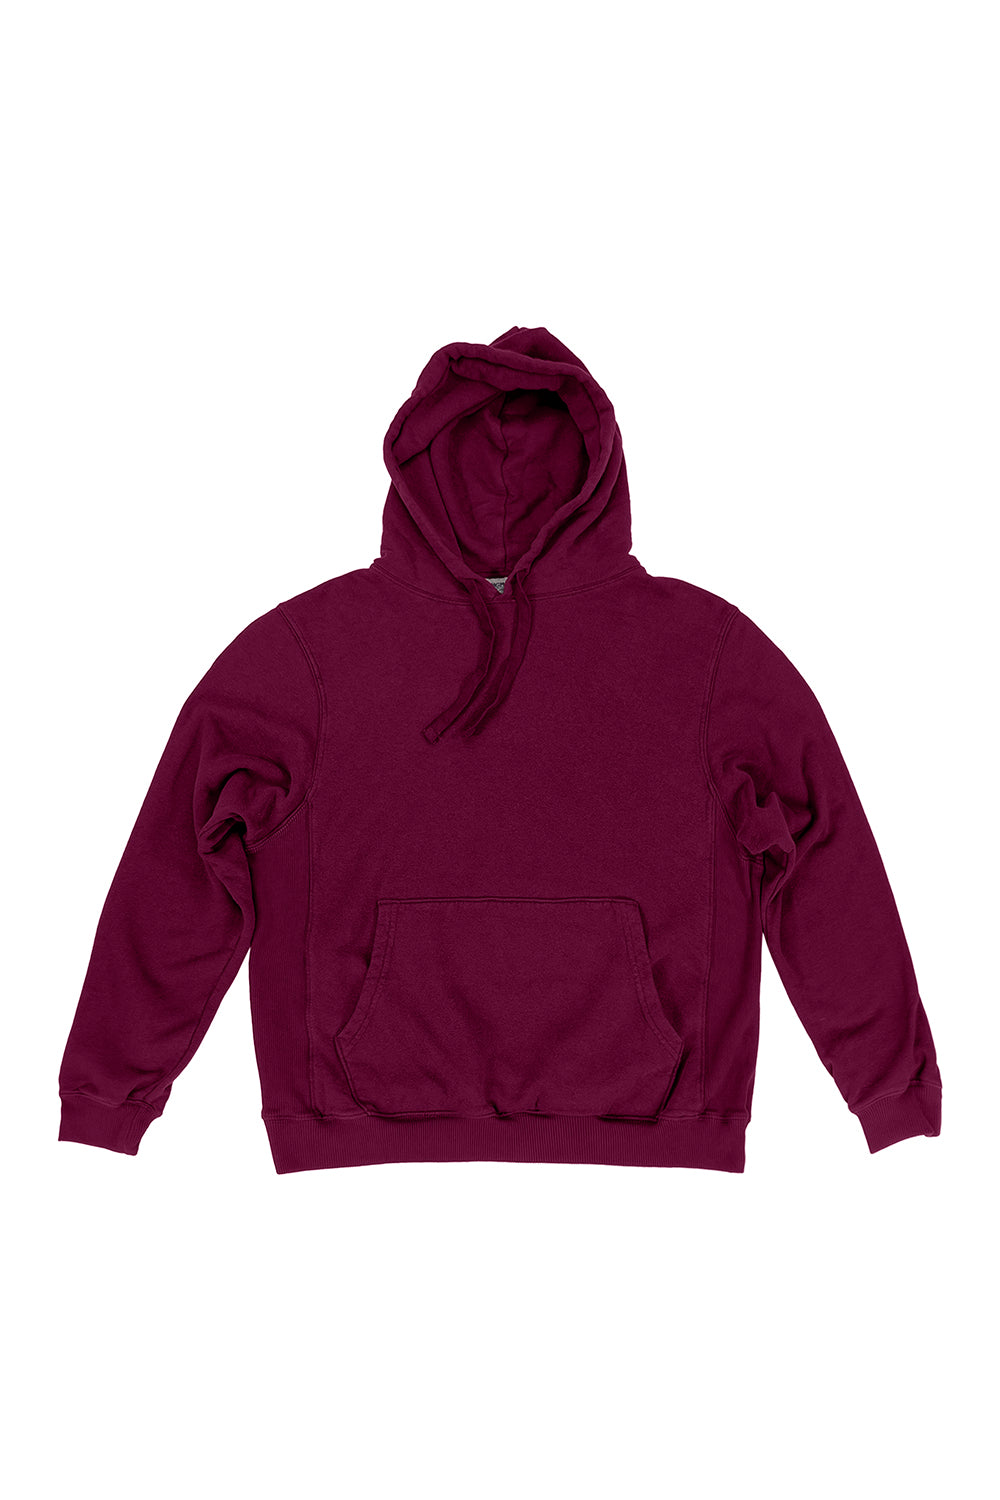 Montauk Hooded Sweatshirt | Jungmaven Hemp Clothing & Accessories